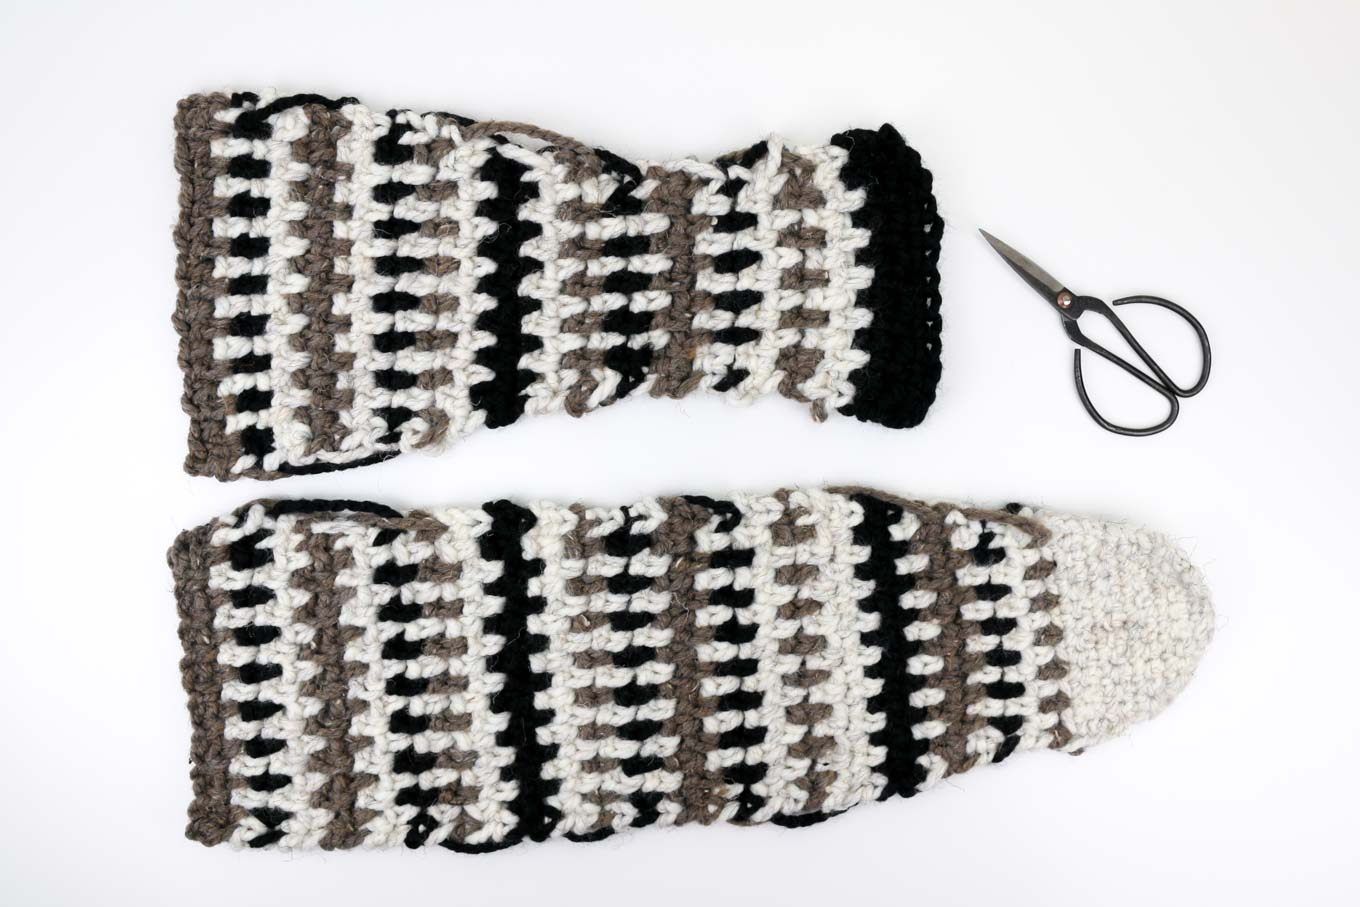 Crochet Slipper Boots Free Pattern Mukluk Crochet Slipper Boots With Flip Flop Soles Free Pattern